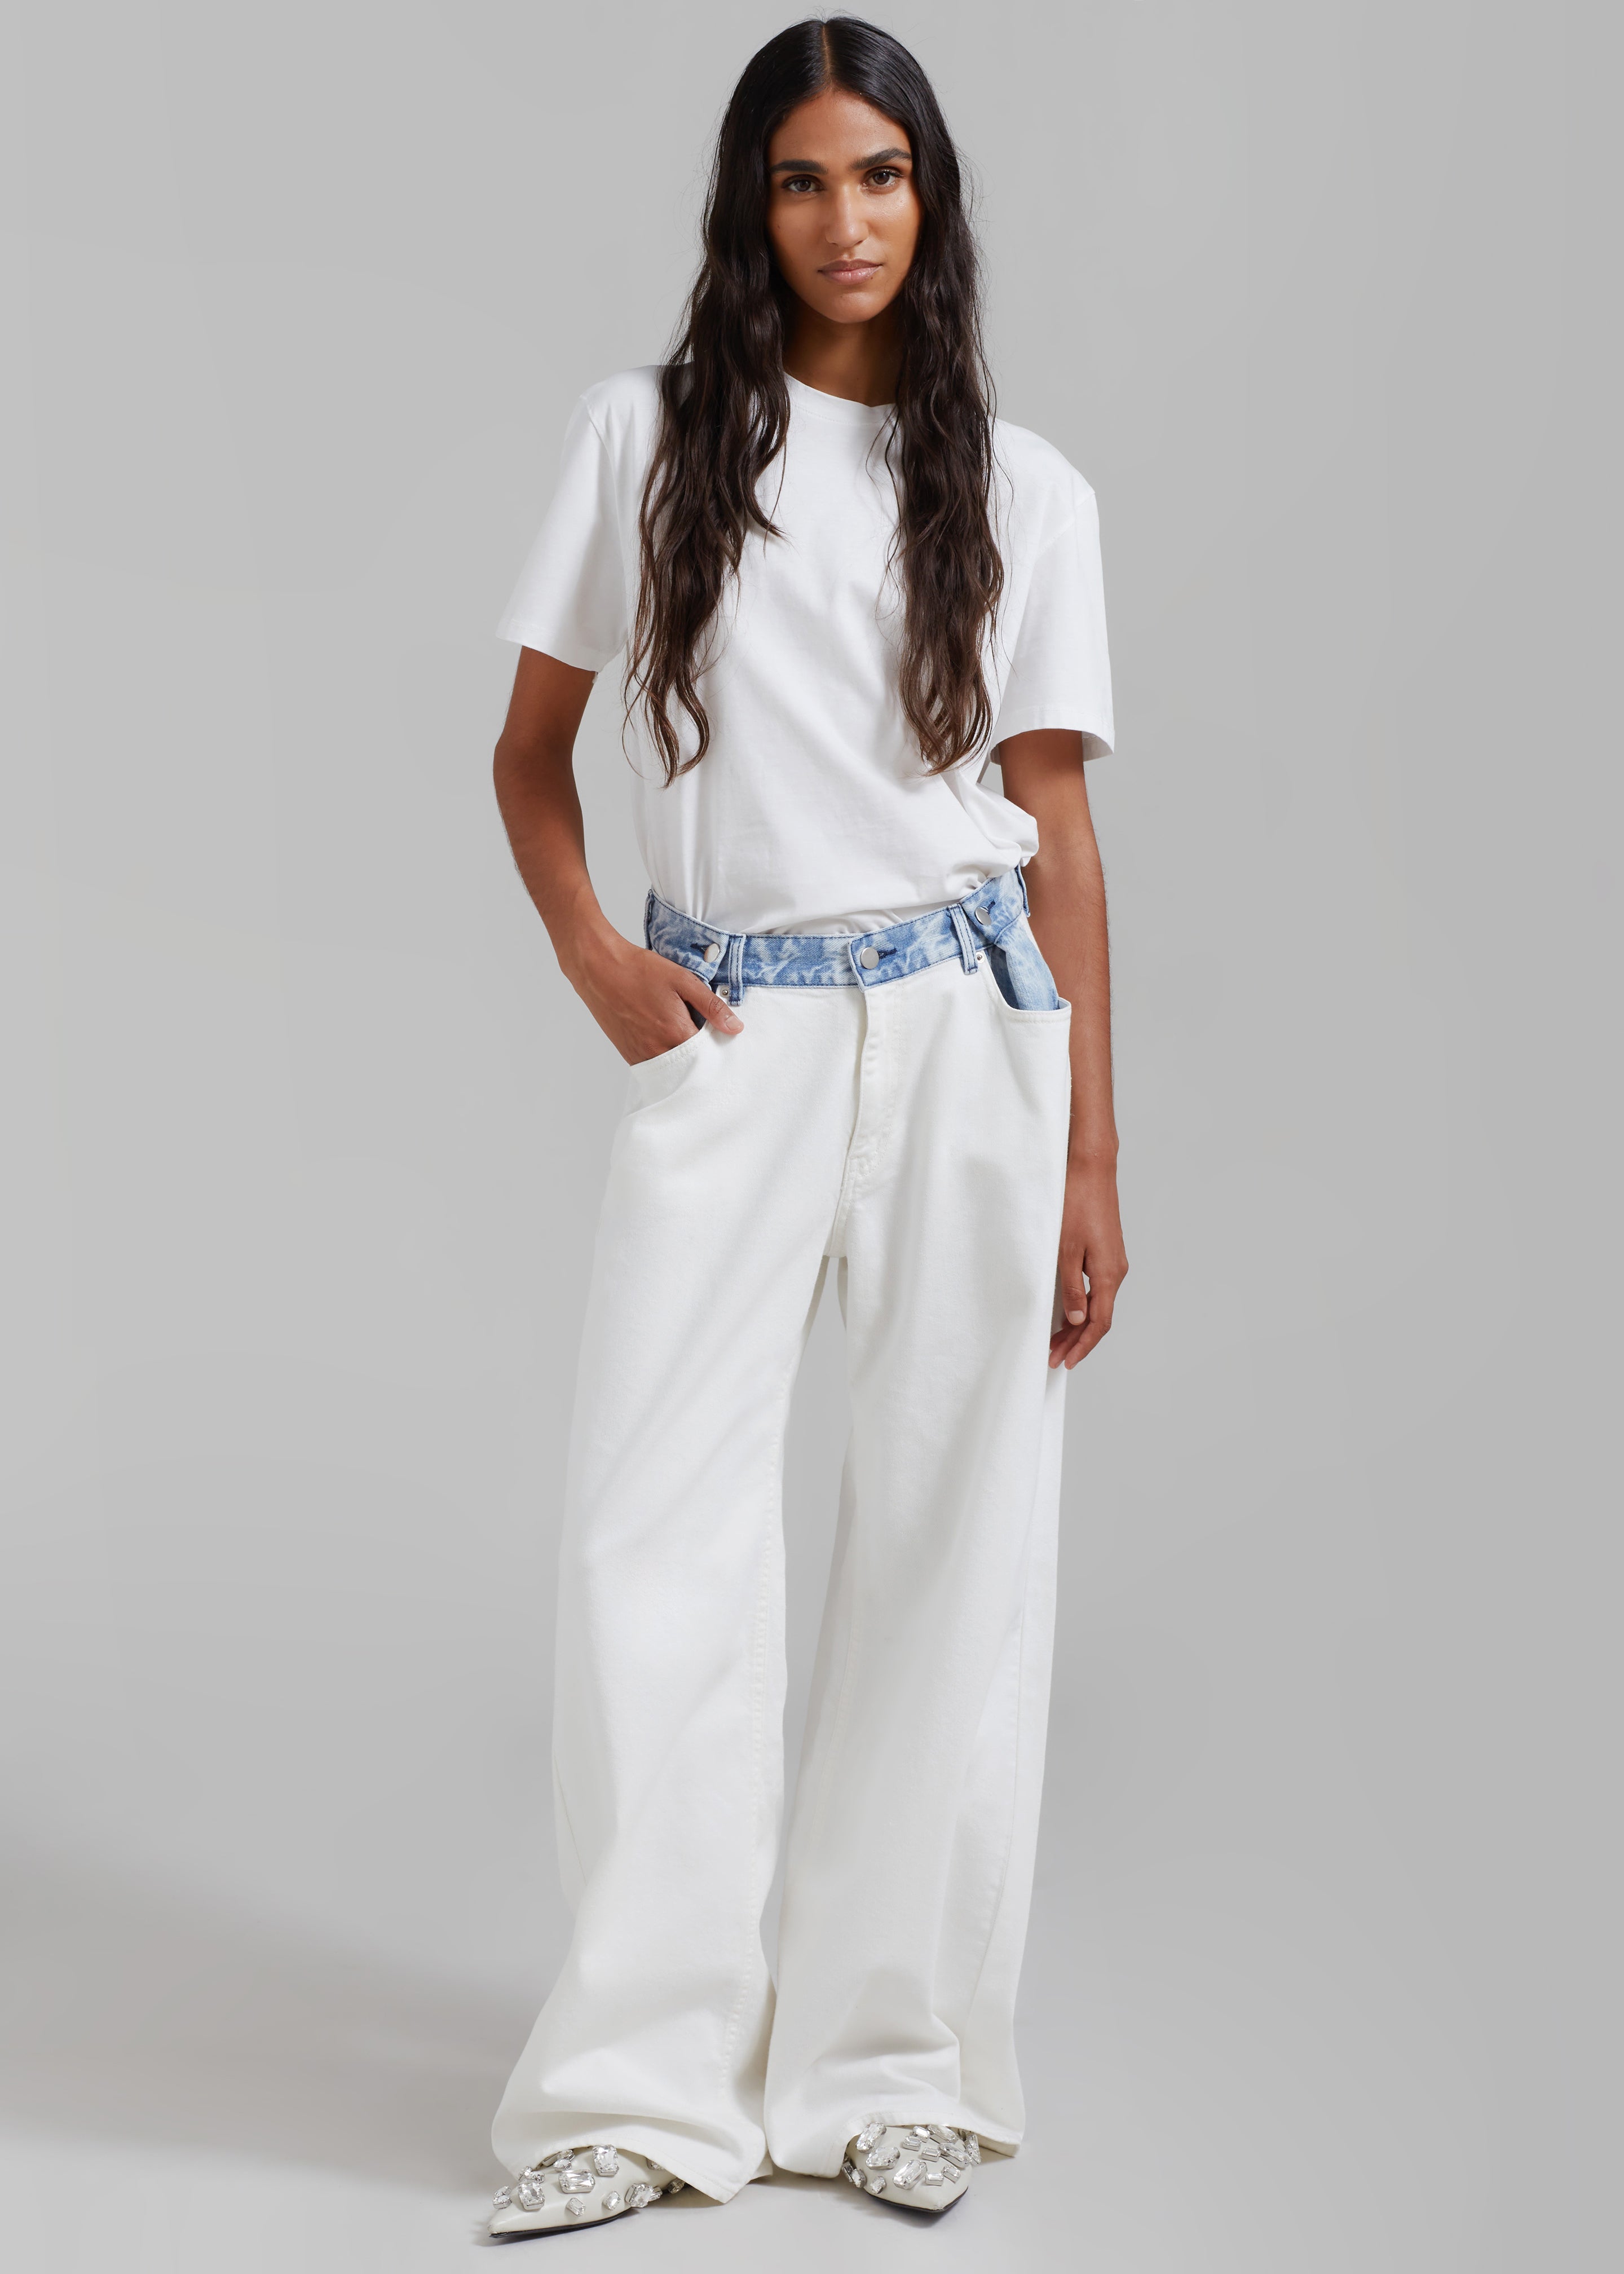 Hayla Contrast Denim Pants - Off White/Blue – Frankie Shop Europe